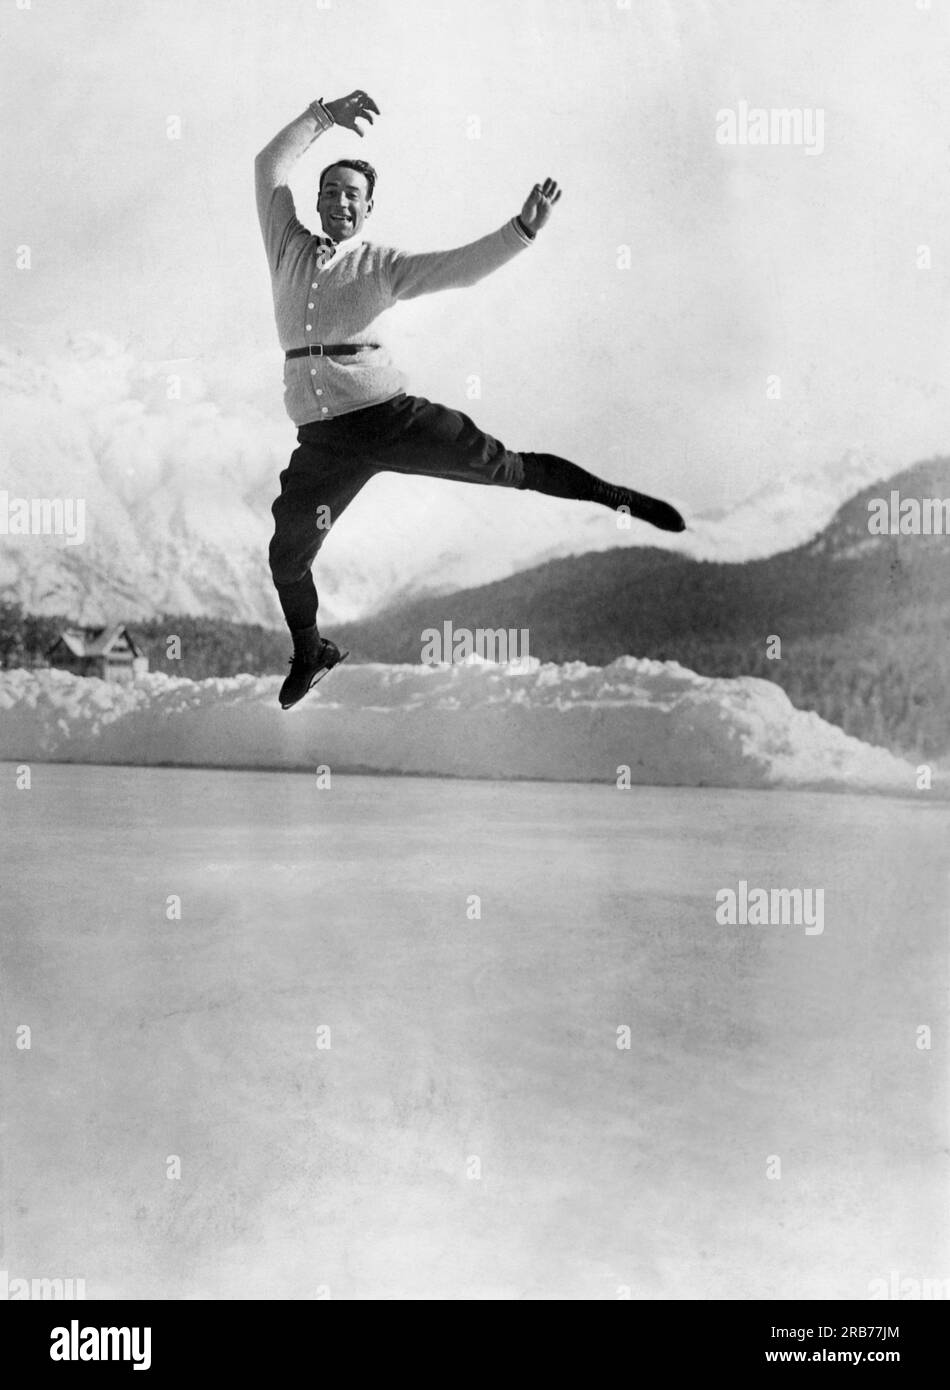 St. Moritz, Switzerland:  December 27, 1923.  Howard Nicholson of New York, holder of numerous championships, shows his 'aerial thriller' at the beginning of the Swiss resort's social season. Stock Photo